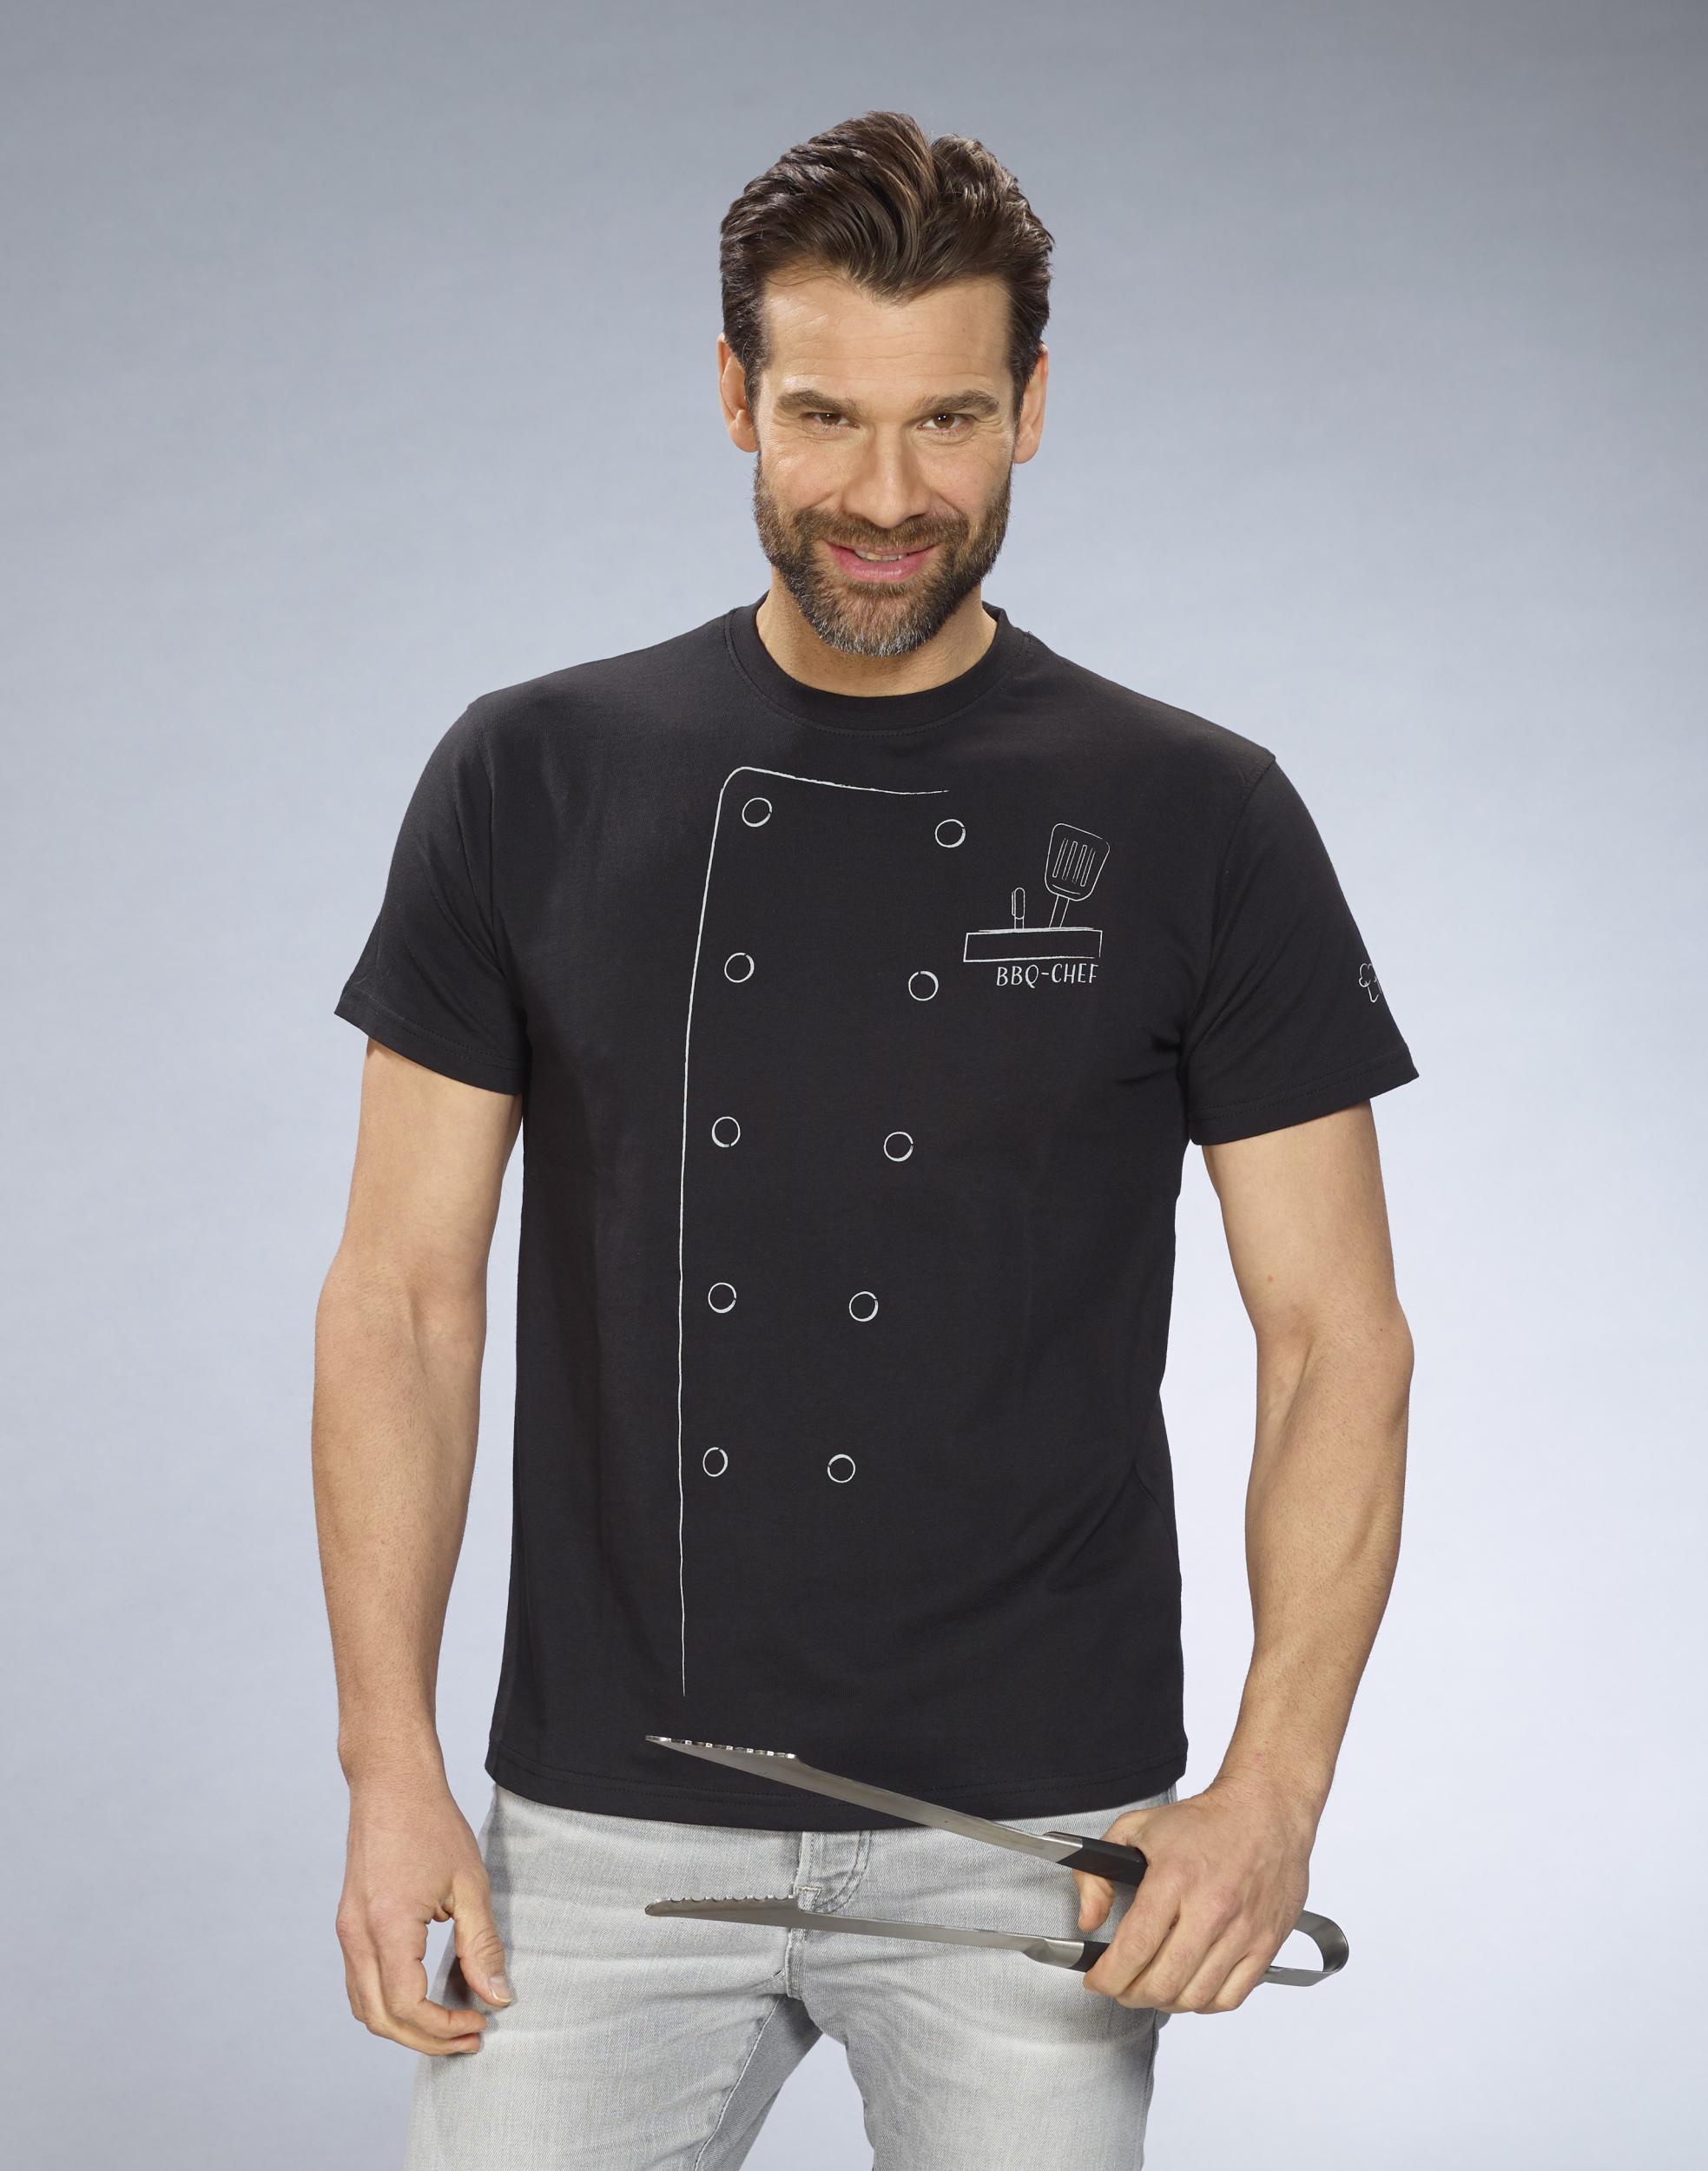 T-Shirt Grillmeister, Farbe schwarz, Gr.L